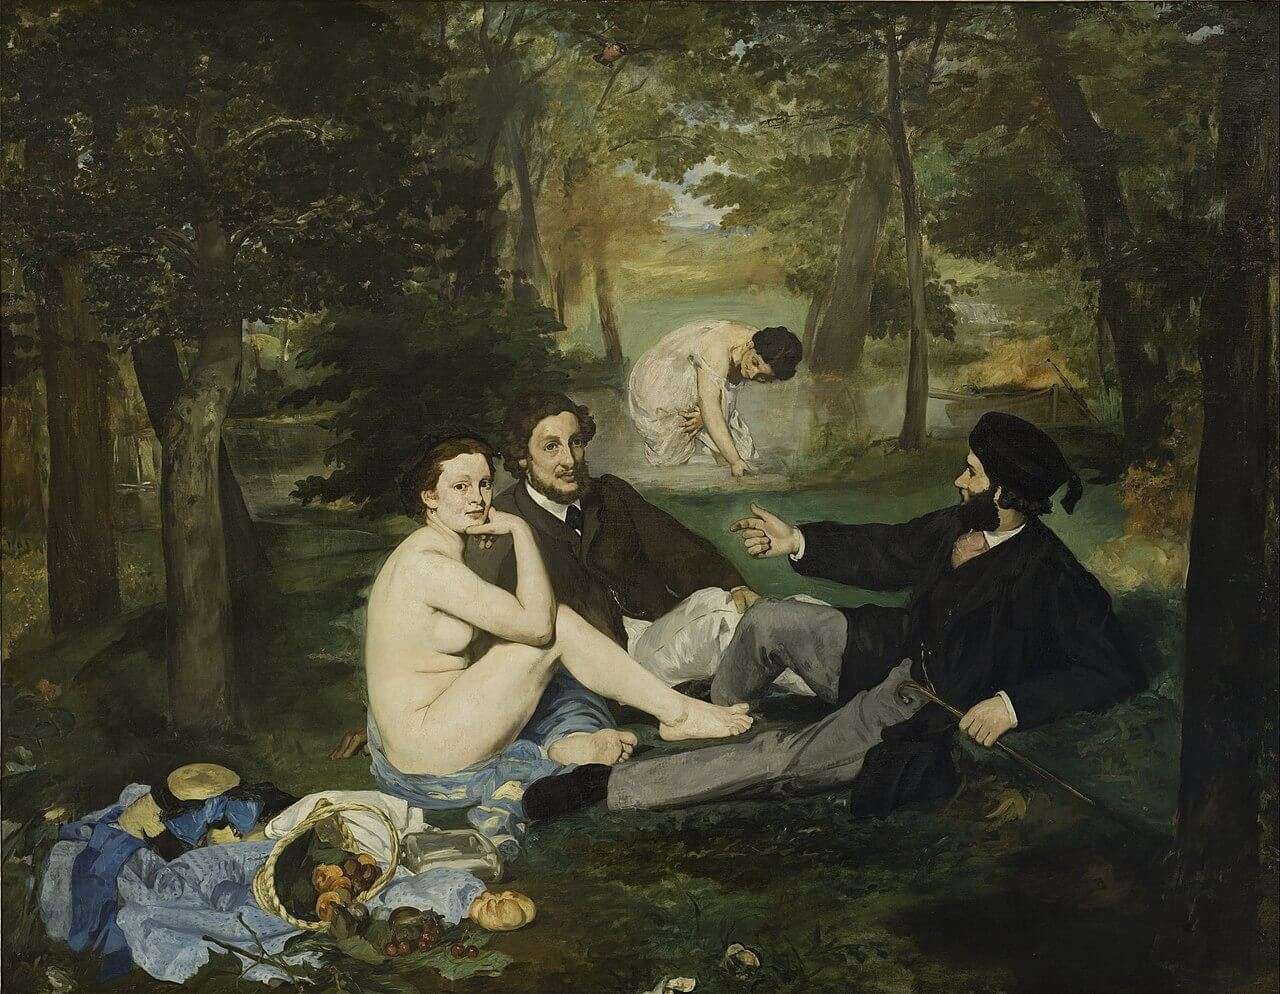 Cuadros Impresionistas - Edouard manet - la merienda campestre